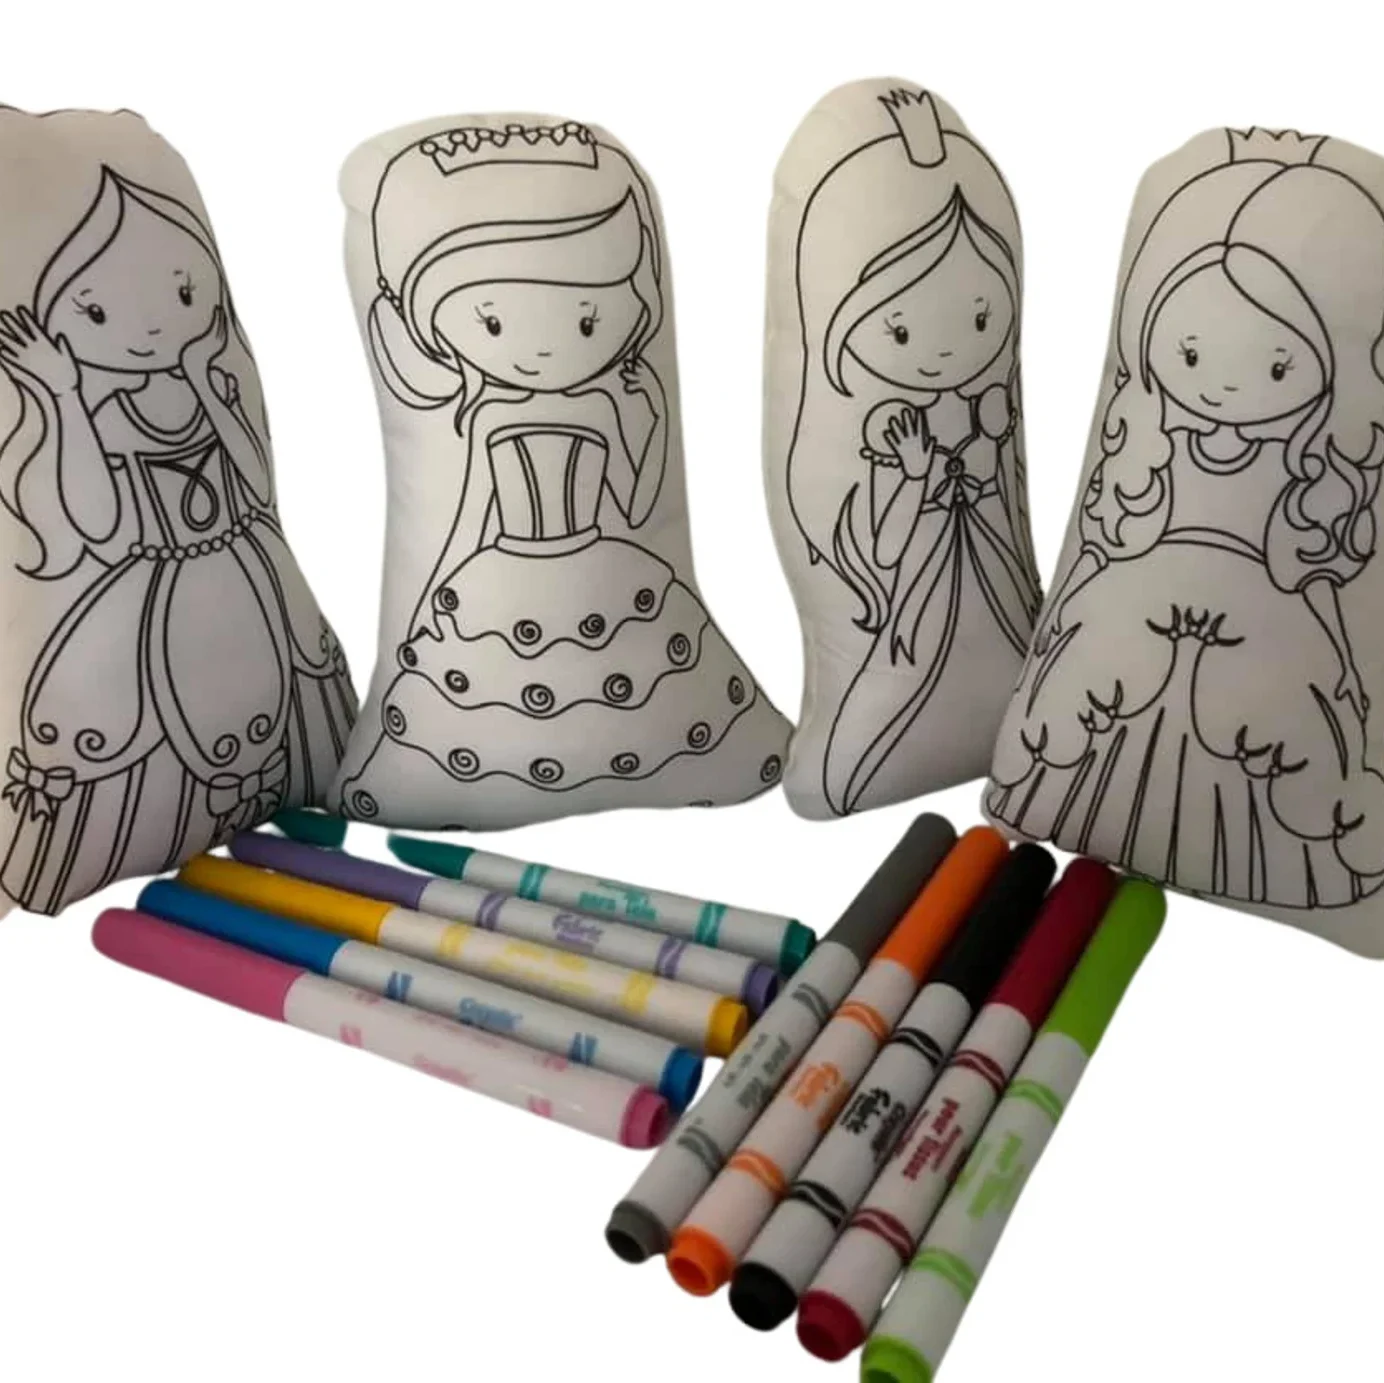 Princess Plush Toys Coloring Craft Kit